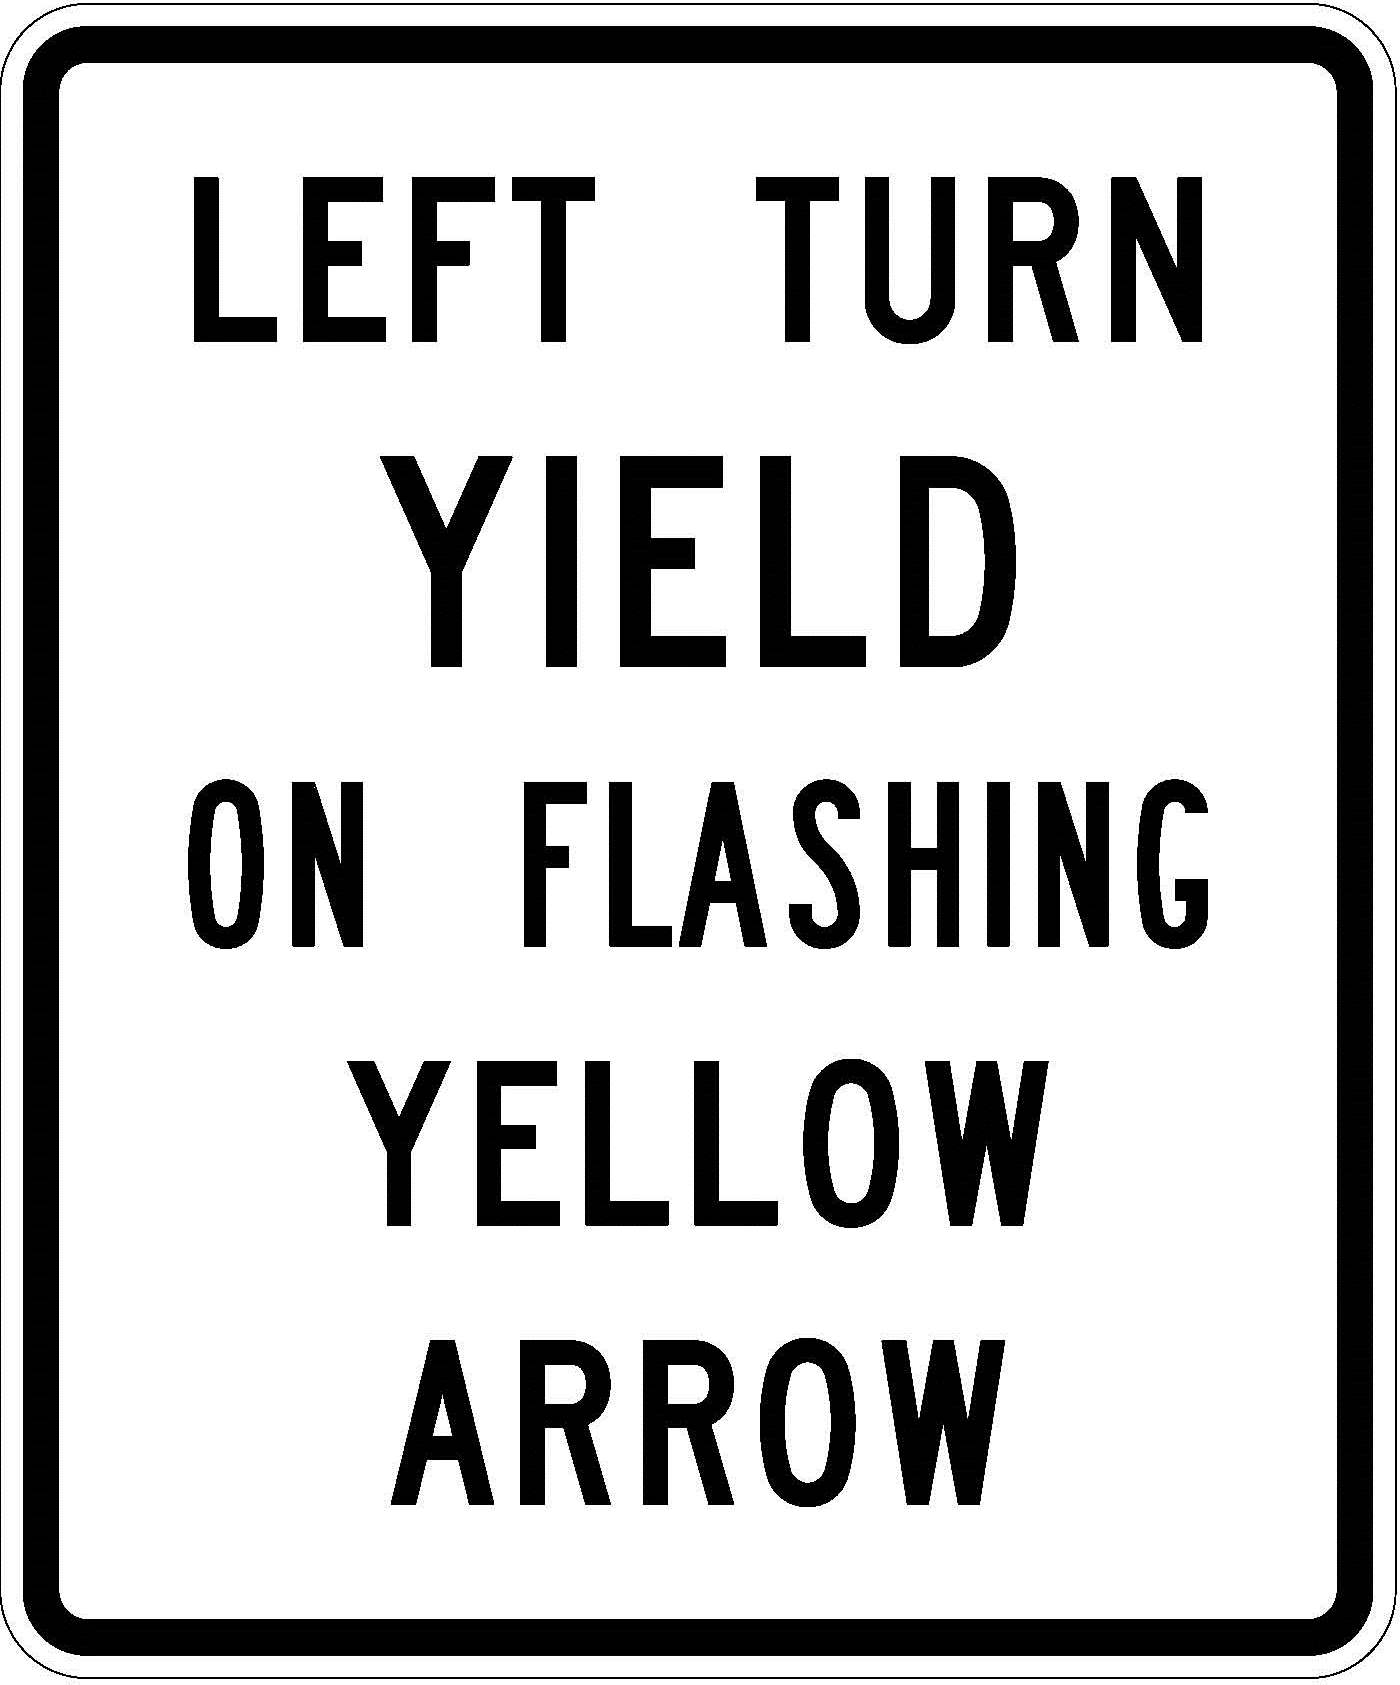 R10-27a Left Turn Yield On Flashing Yellow Arrow JPEG detail image